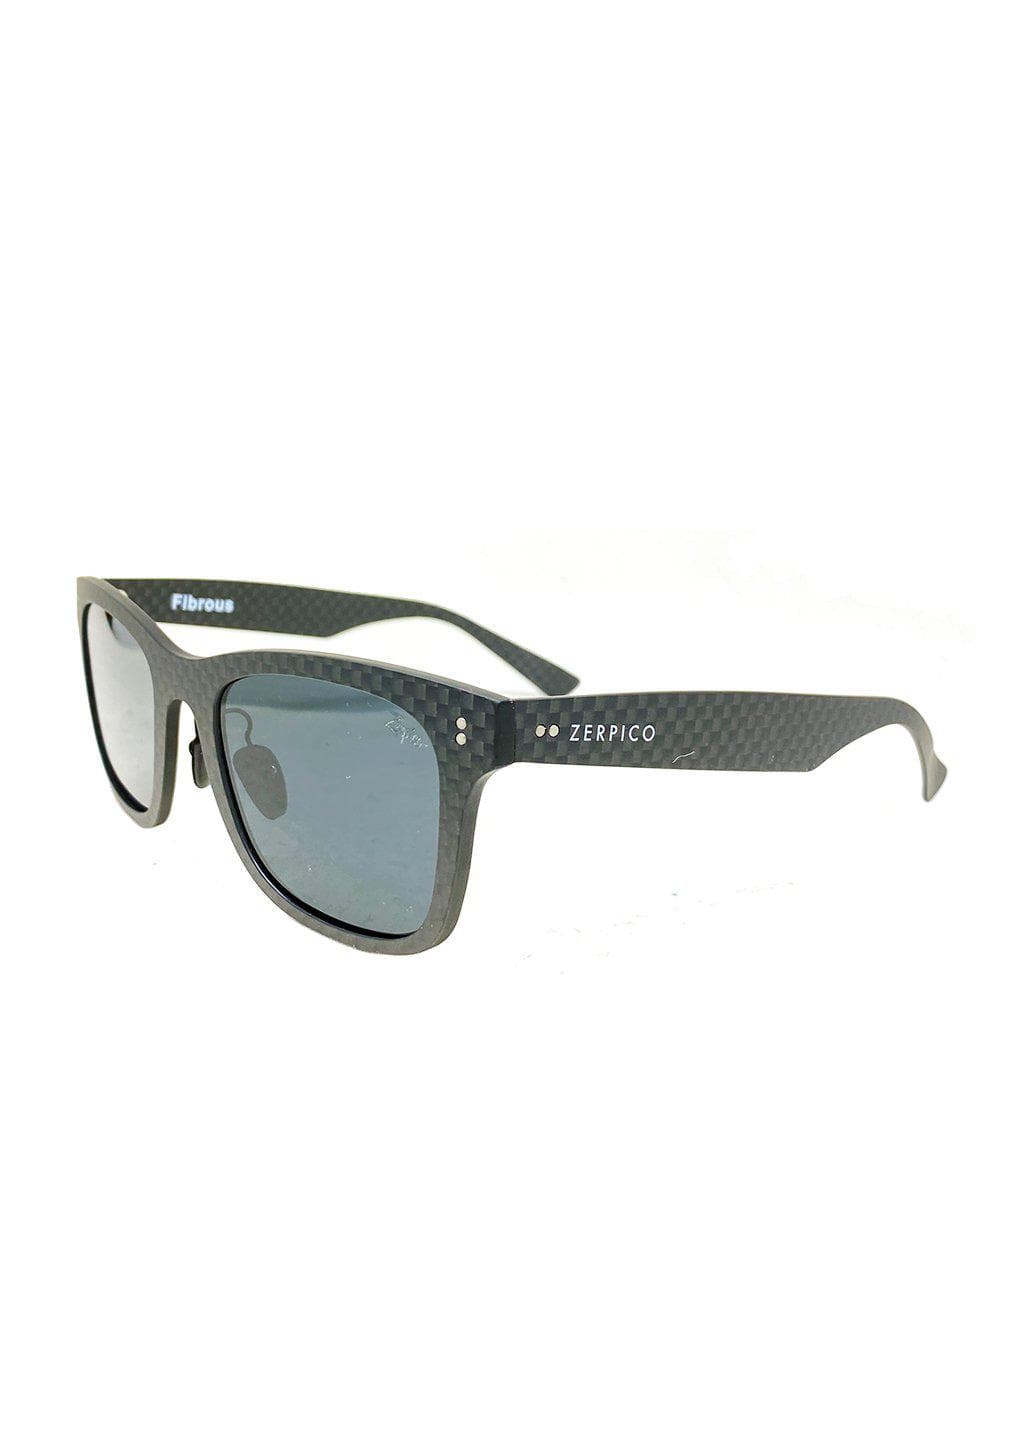 Fibrous V4 Wayfarer - Carbon Fiber Sunglasses-15